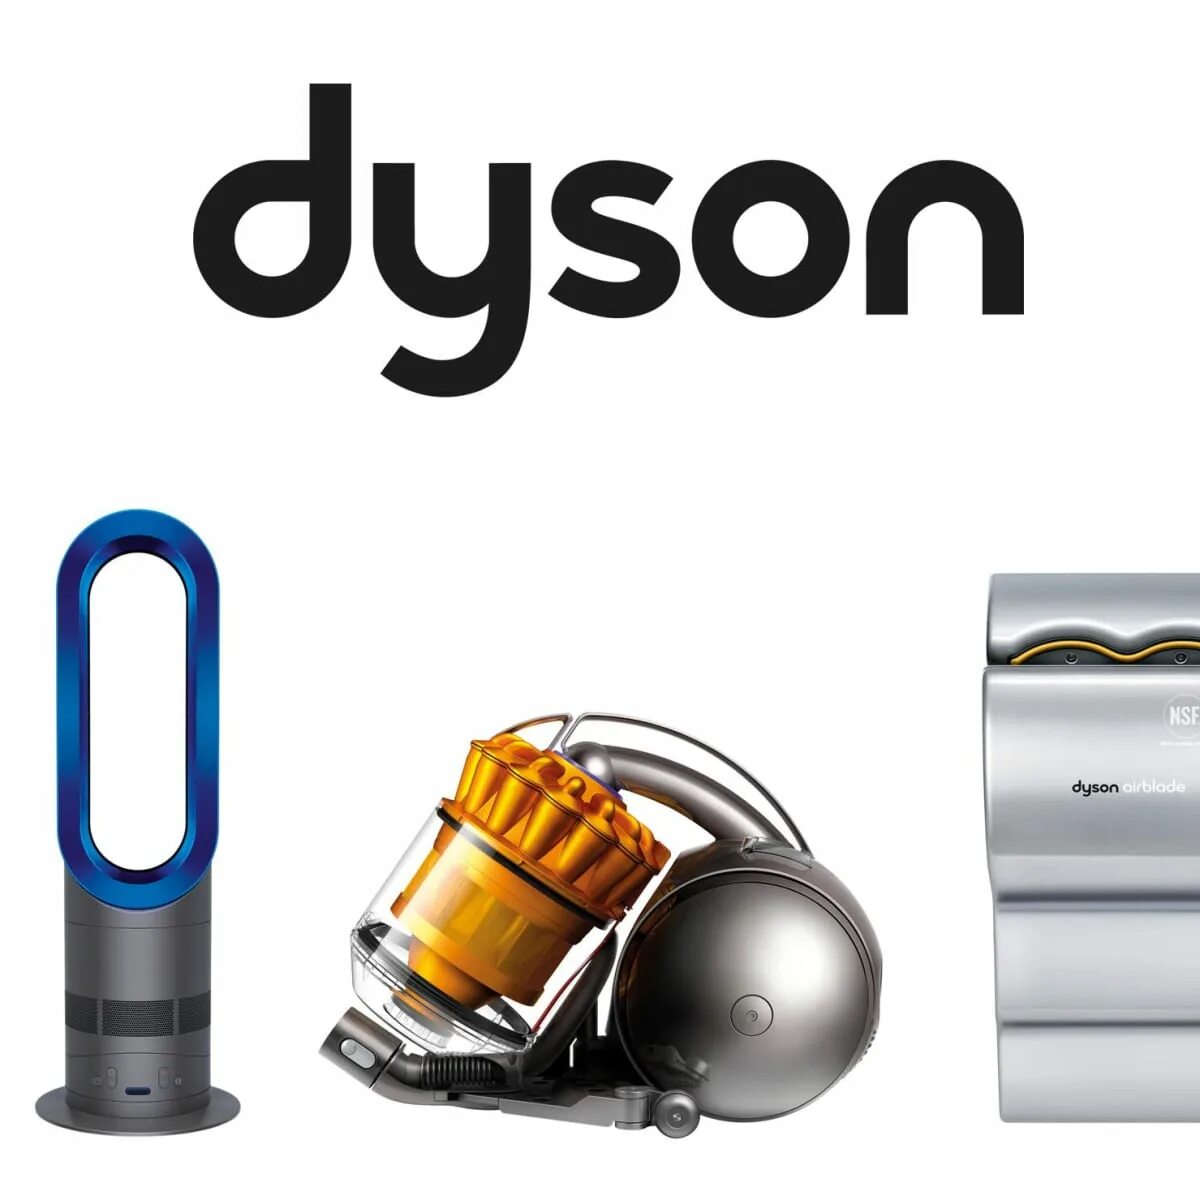 Dyson. Дайсон бренд. Дайсон логотип. Пылесос Dyson логотип. Продукция дайсон